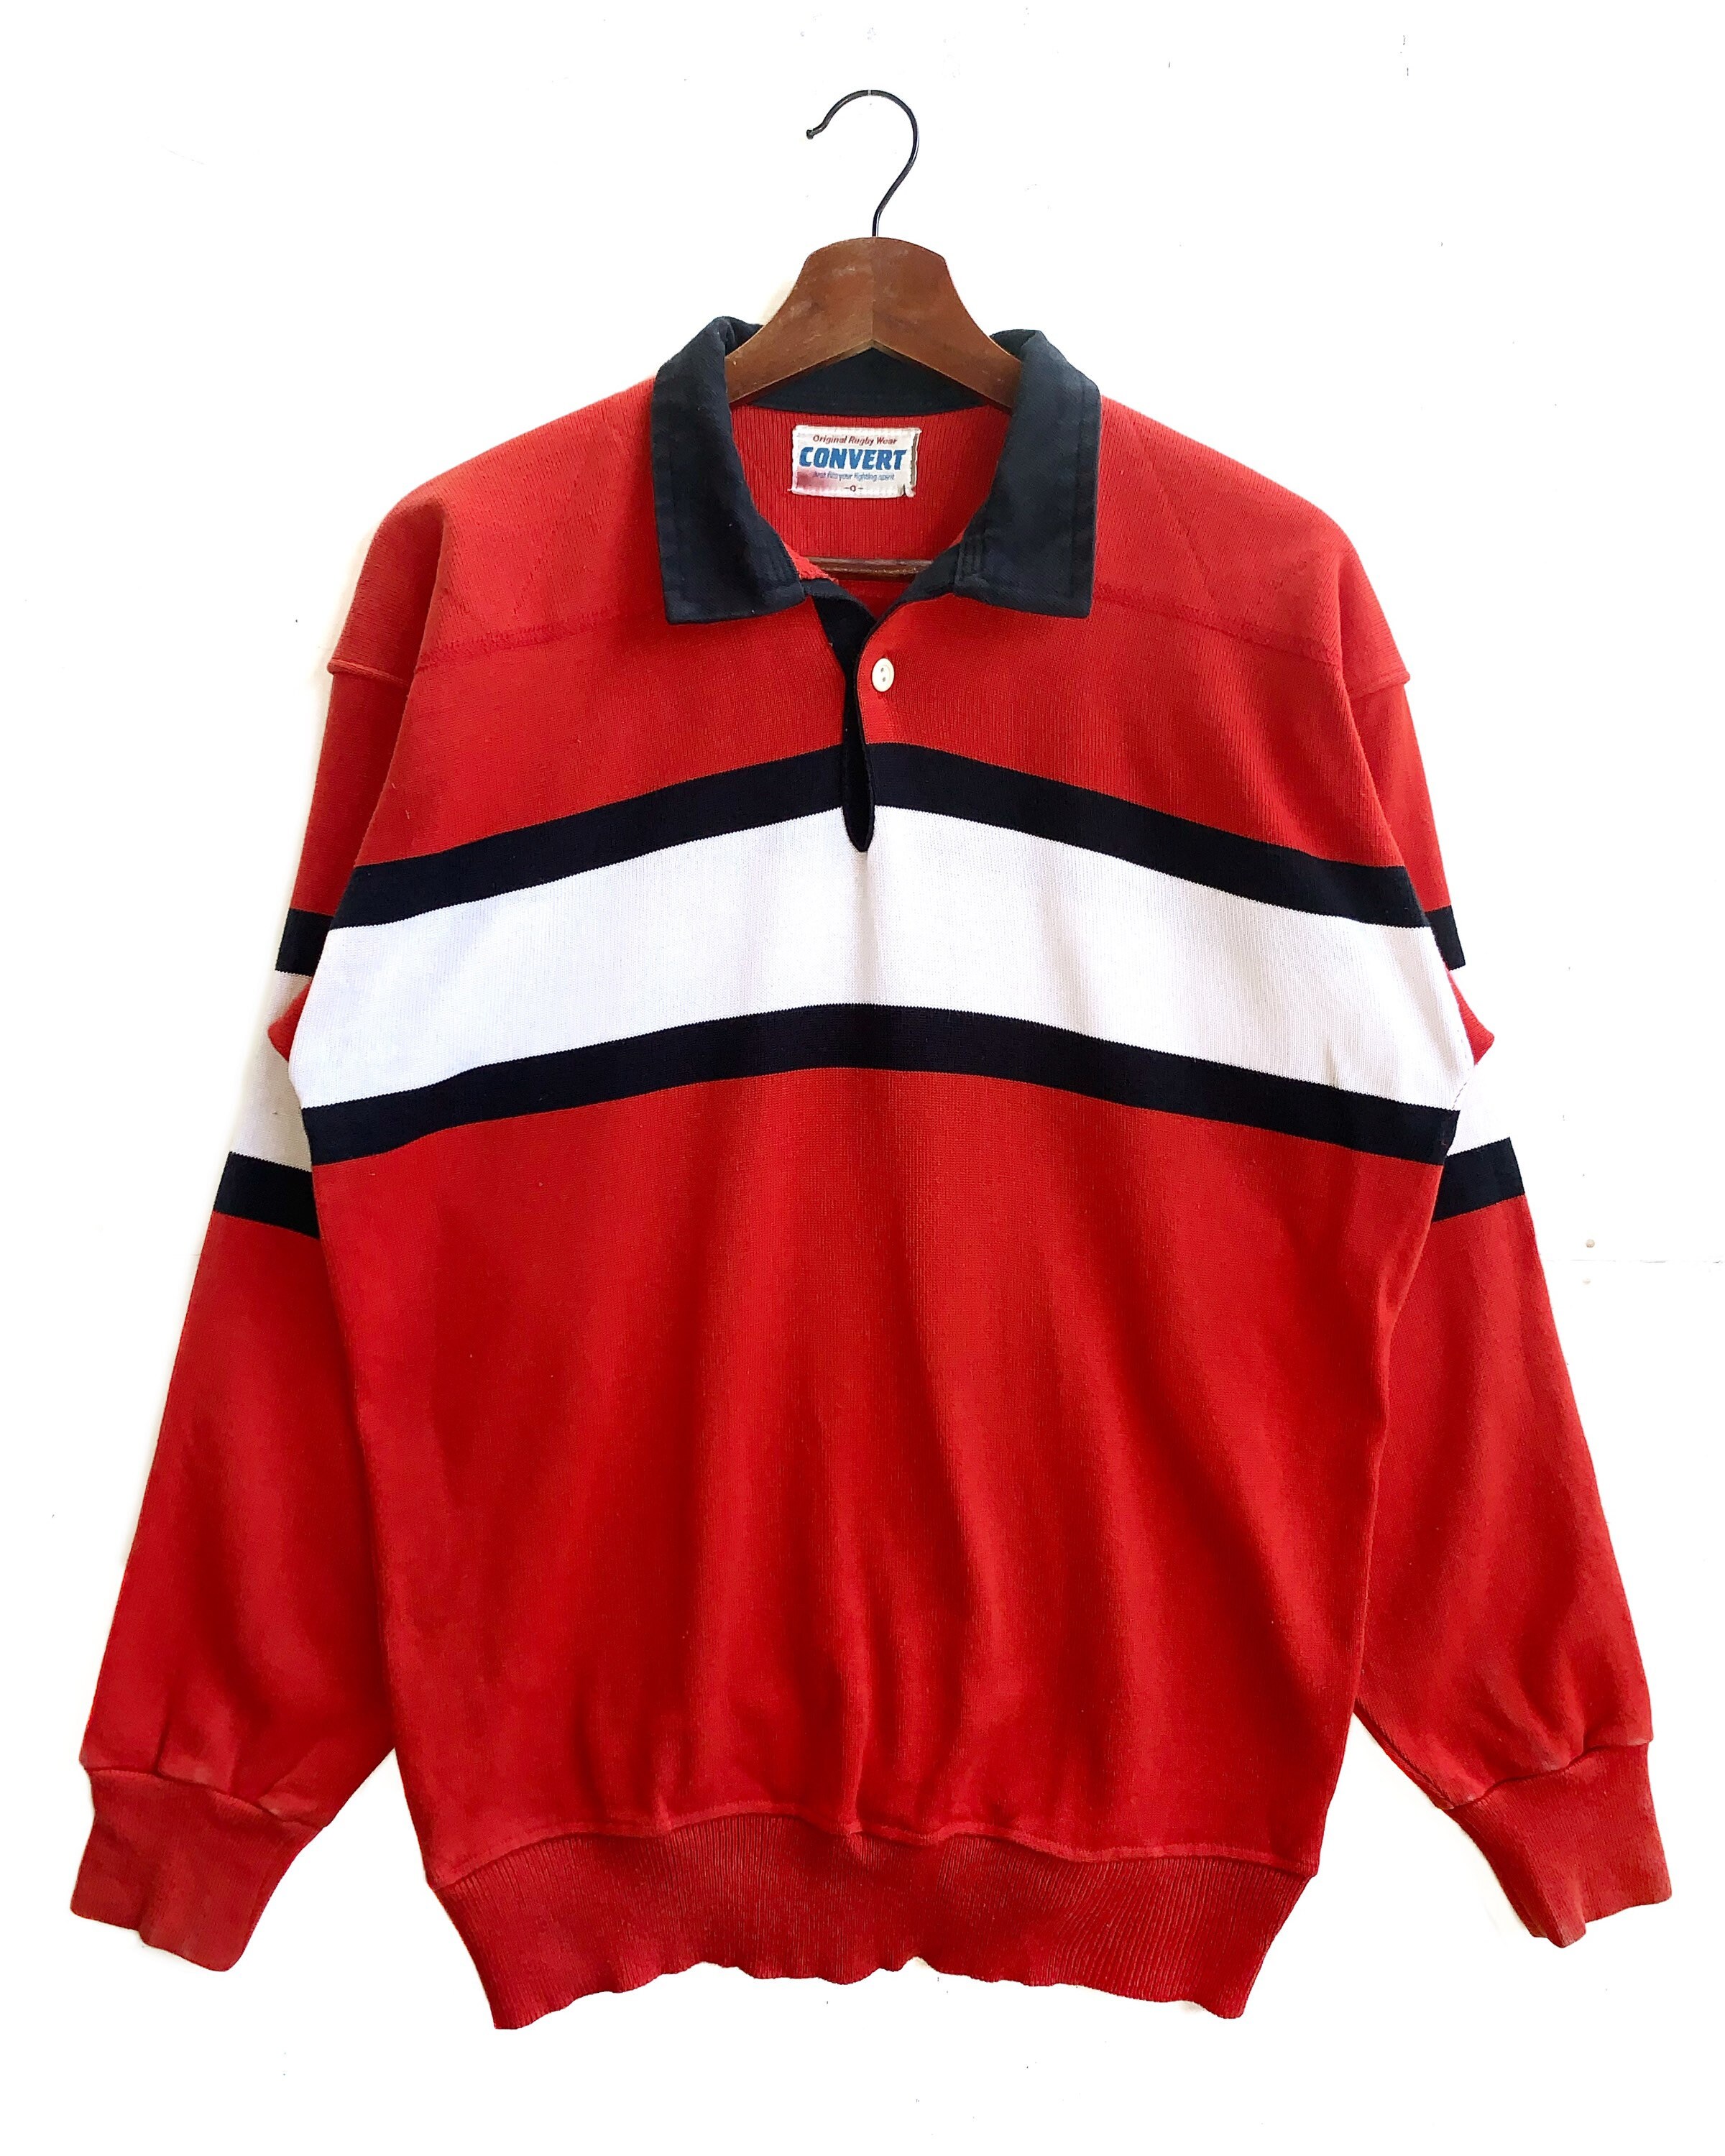 Vintage 90s Convert Rugby Jersey Sweatshirt/2 Tones | Etsy